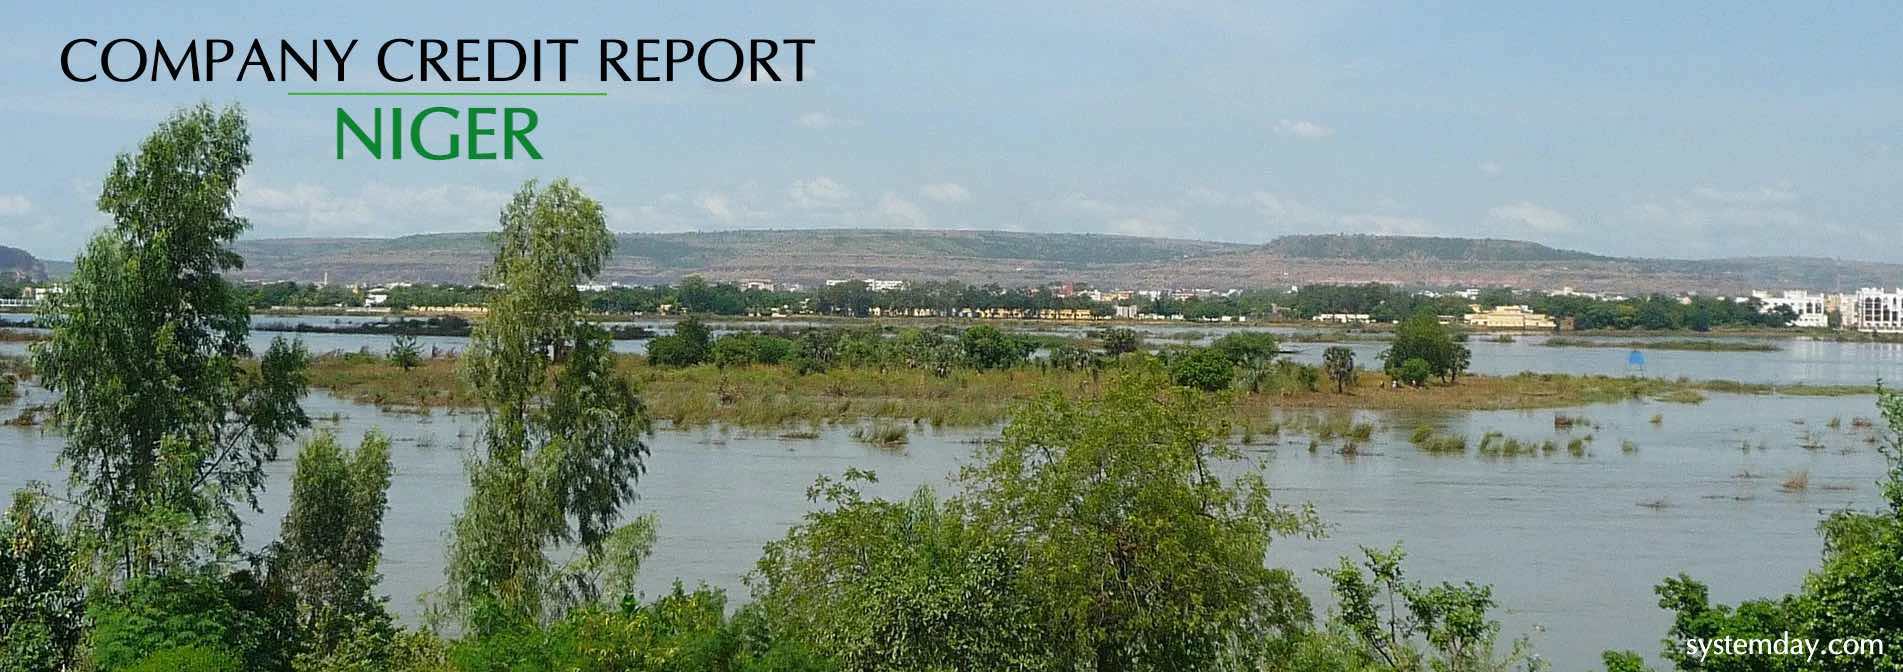 Niger Company Credit Report